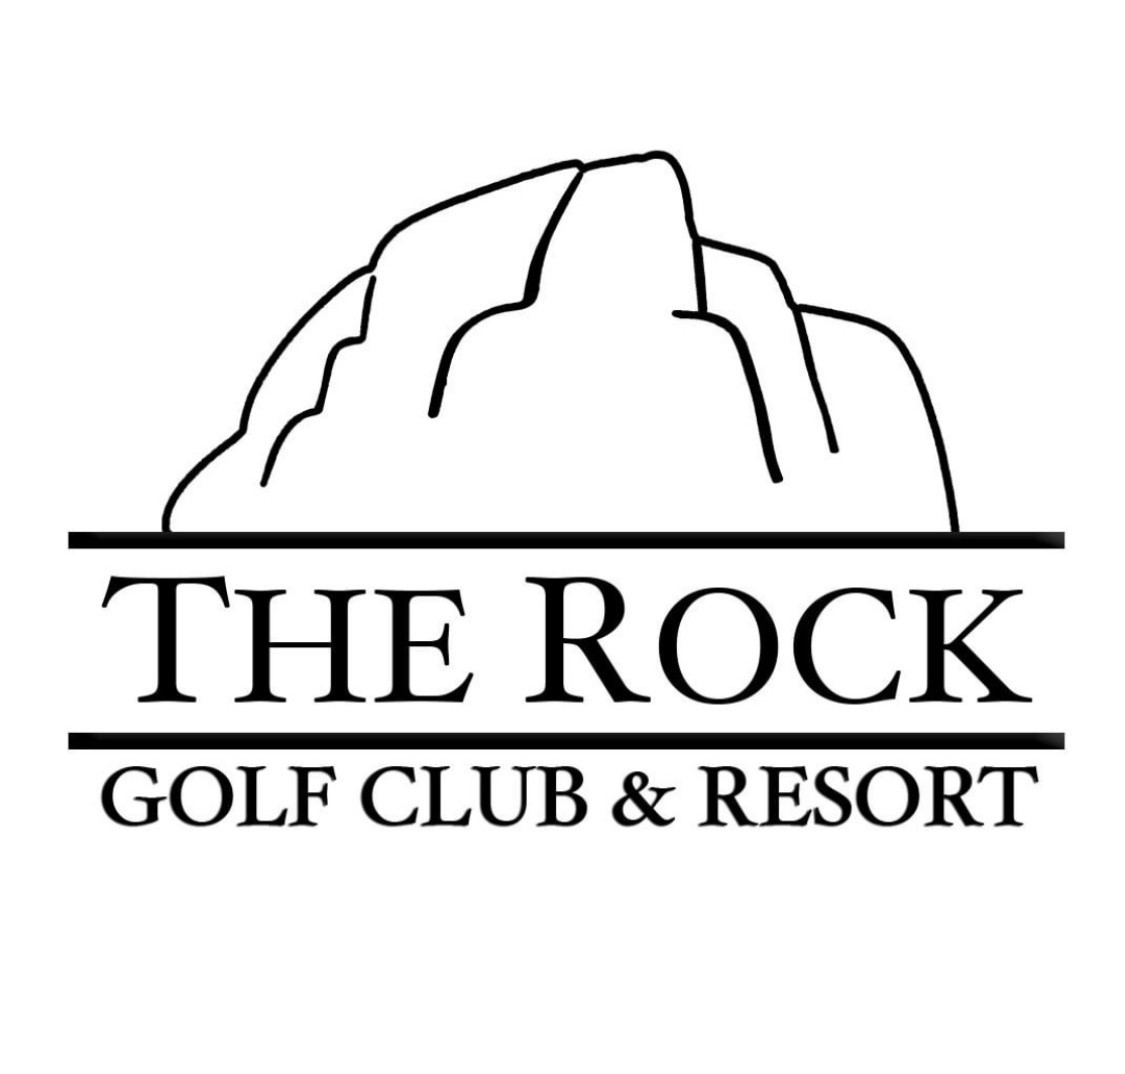 The Rock Golf Club & Resort